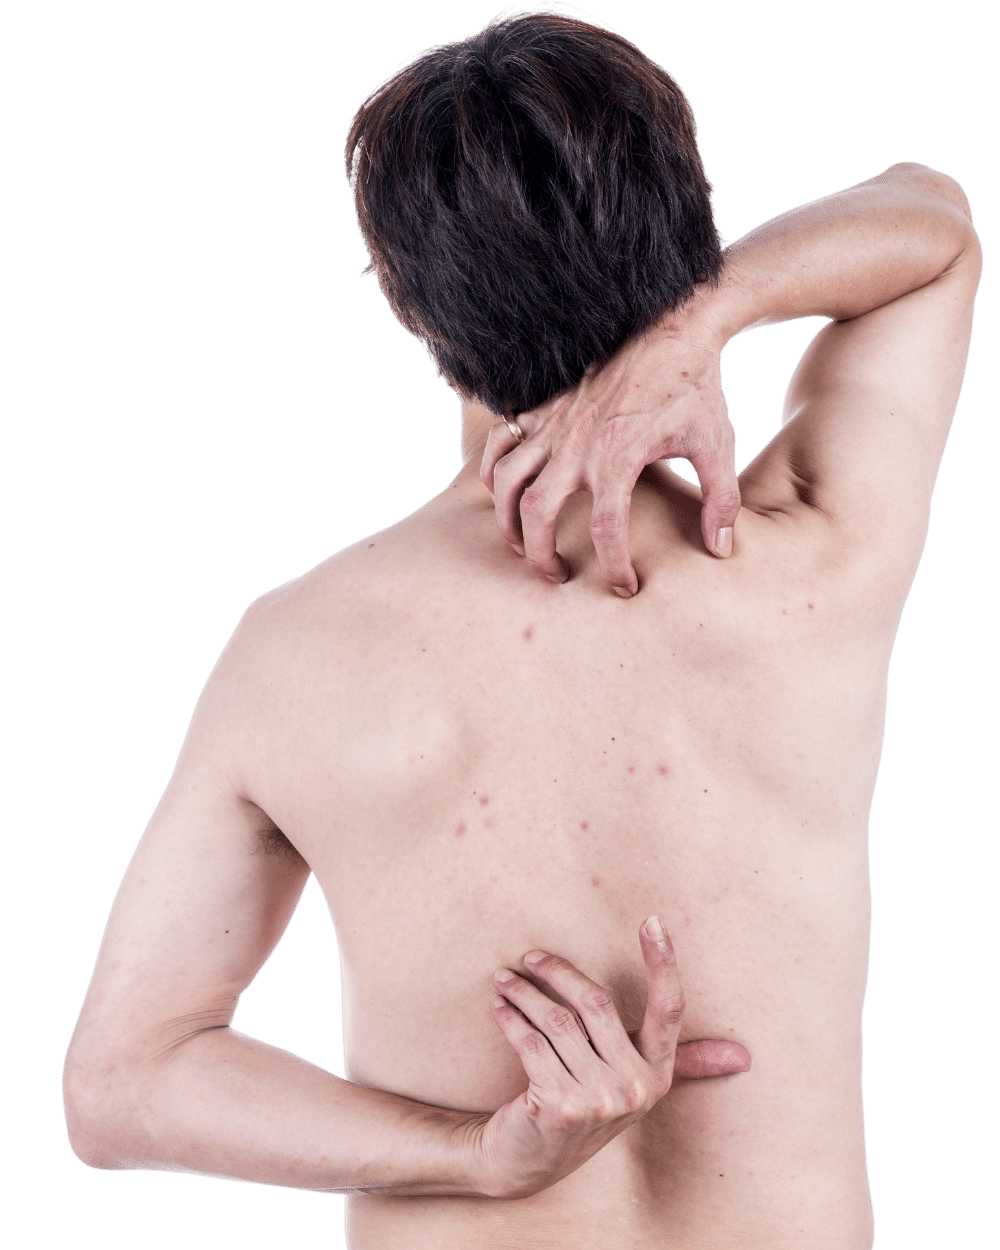 mens health month - men rashes